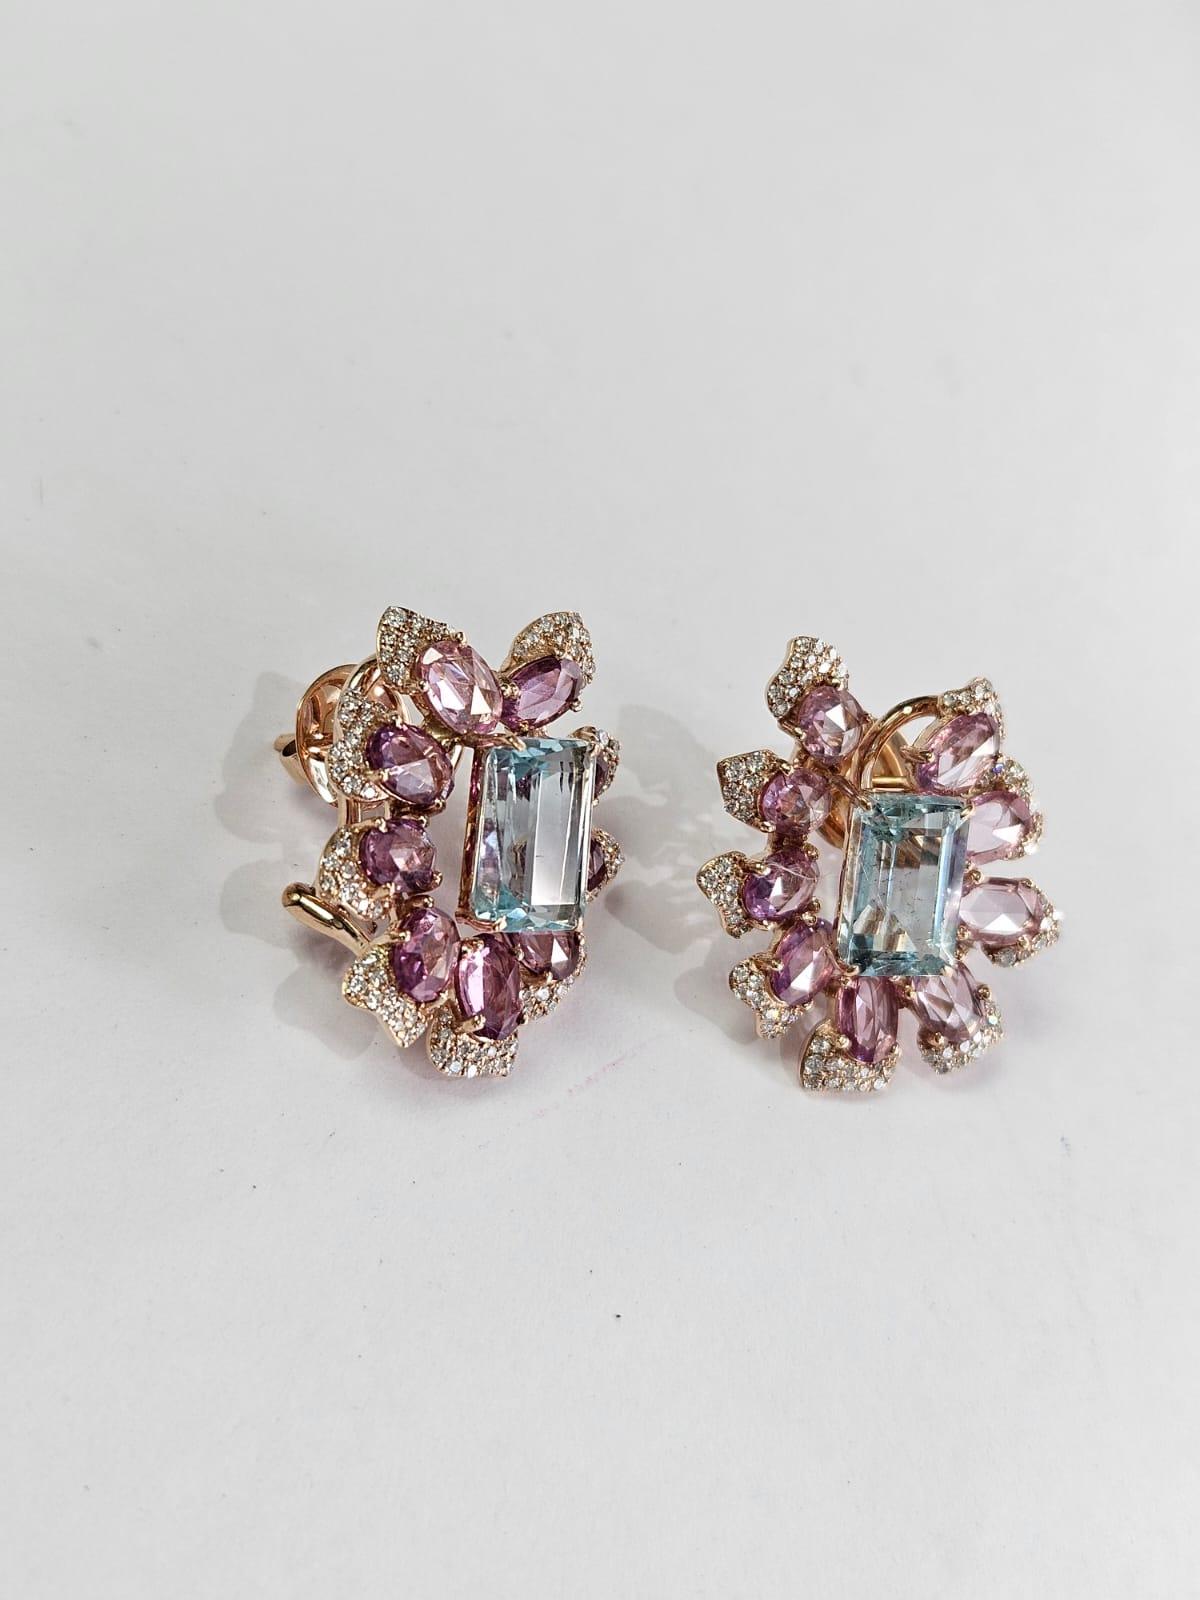 Emerald Cut Set in 18K Rose Gold, Aquamarine, Multi Sapphires & Diamonds Stud Earrings For Sale